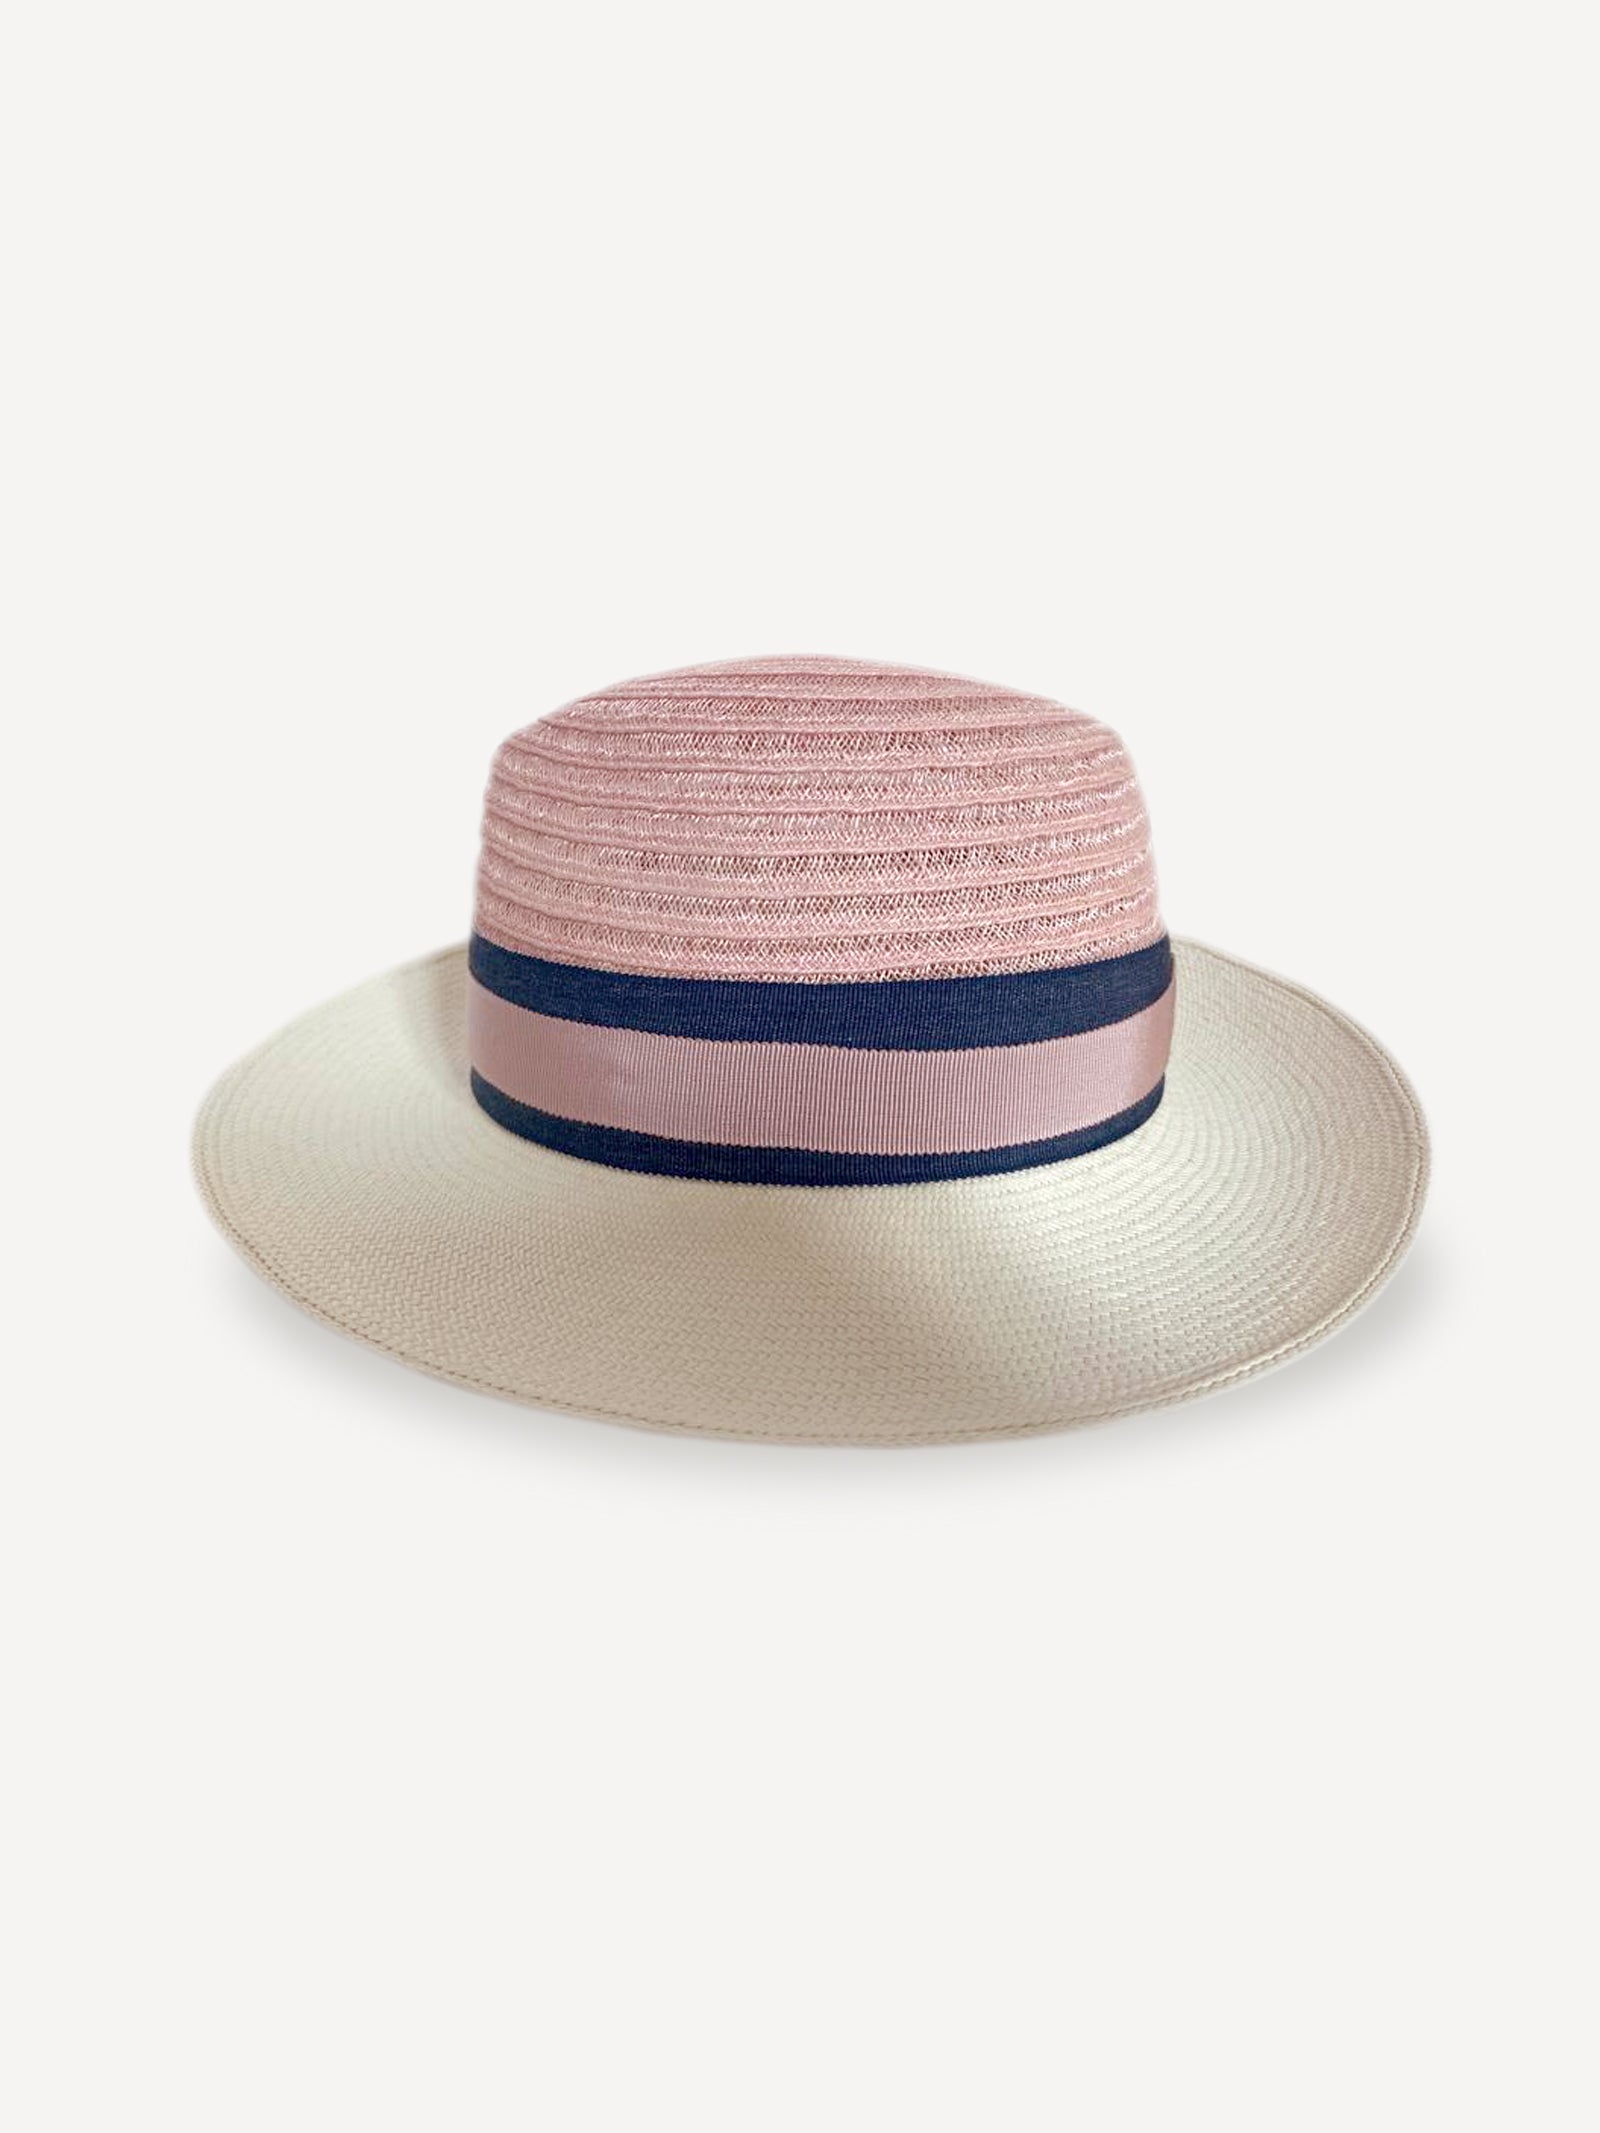 Capri Hat for woman 100% Capri straw pink and whitehat